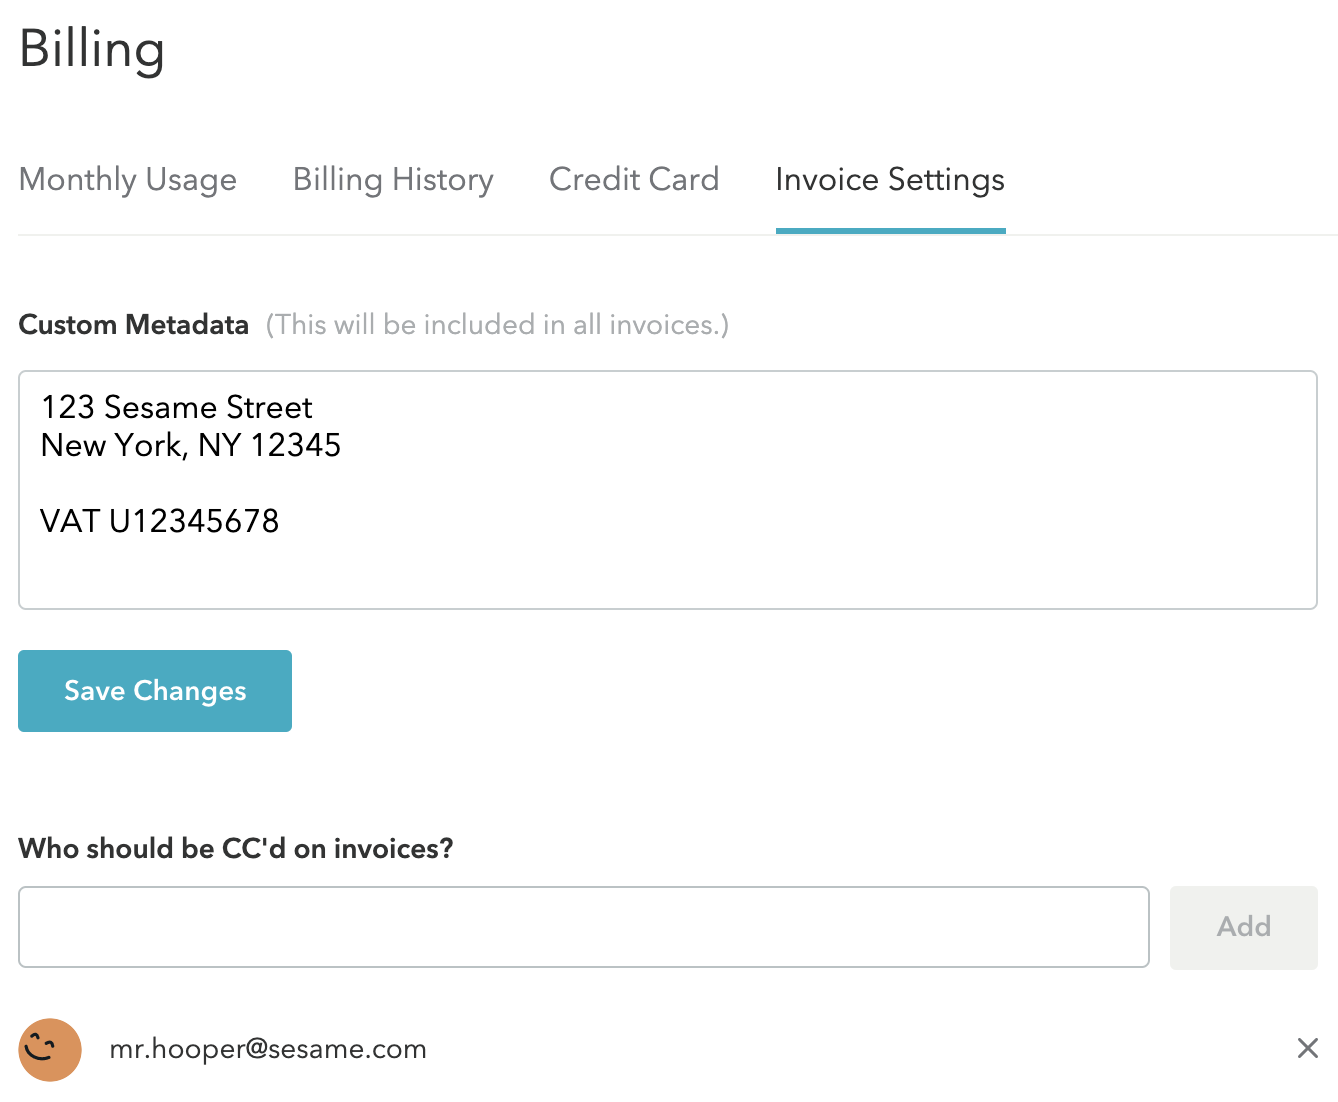 Screenshot showing the billing invoice settings inputs